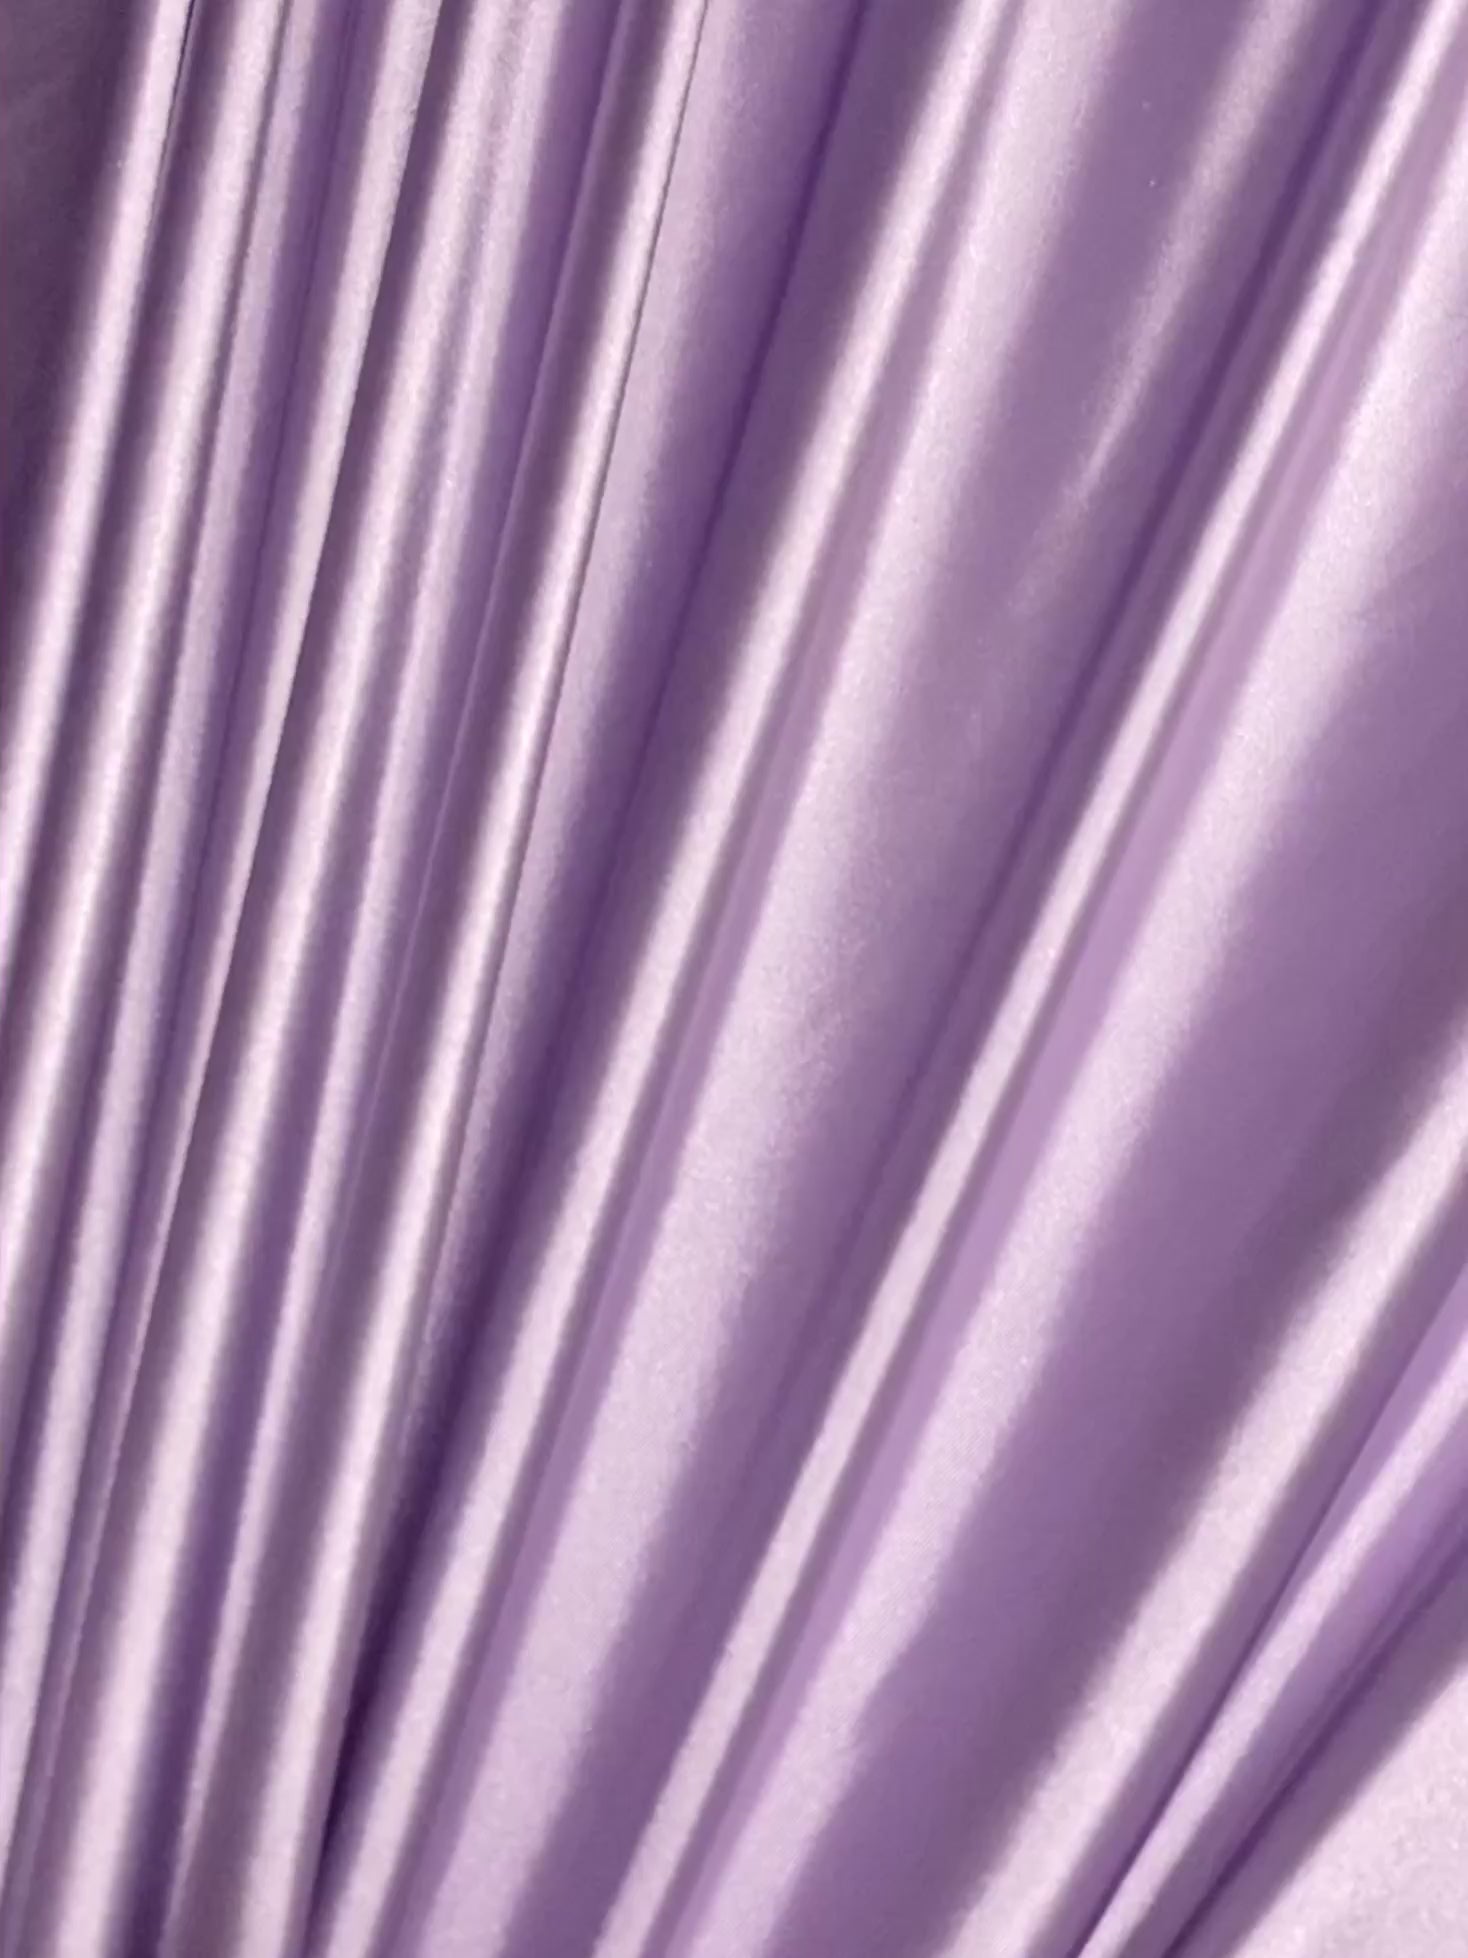 lavender spandex, purple nylon spandex, light Light purple spandex, dark purple nylon spandex, lavender shiny nylon spandex for woman, lavender shiny nylon for bride, spandex for swim wear, premium spandex, spandex on sale, low price spandex